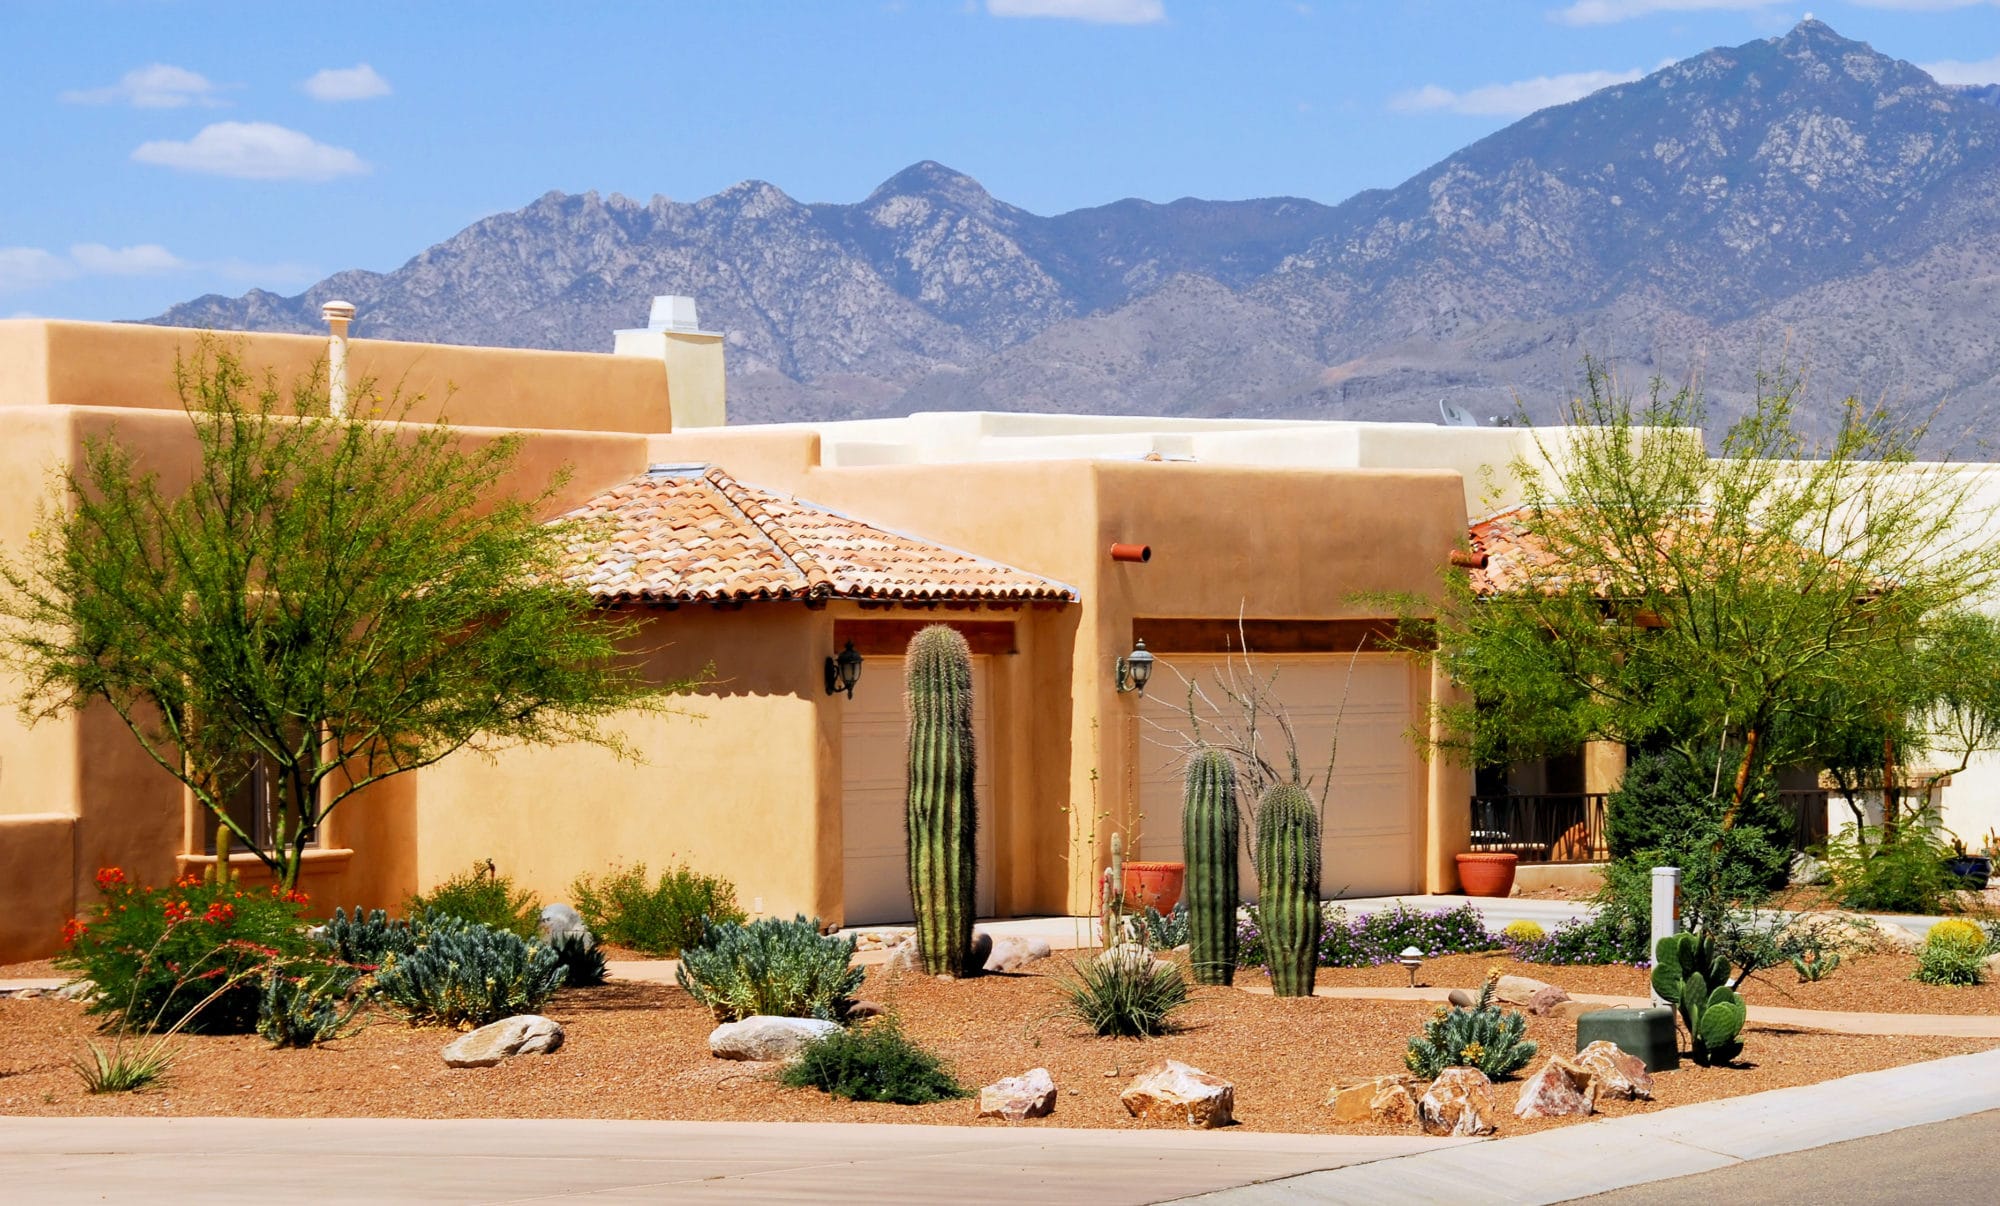 Beautiful adobe home and southwestern architecture glows in the Arizona sun